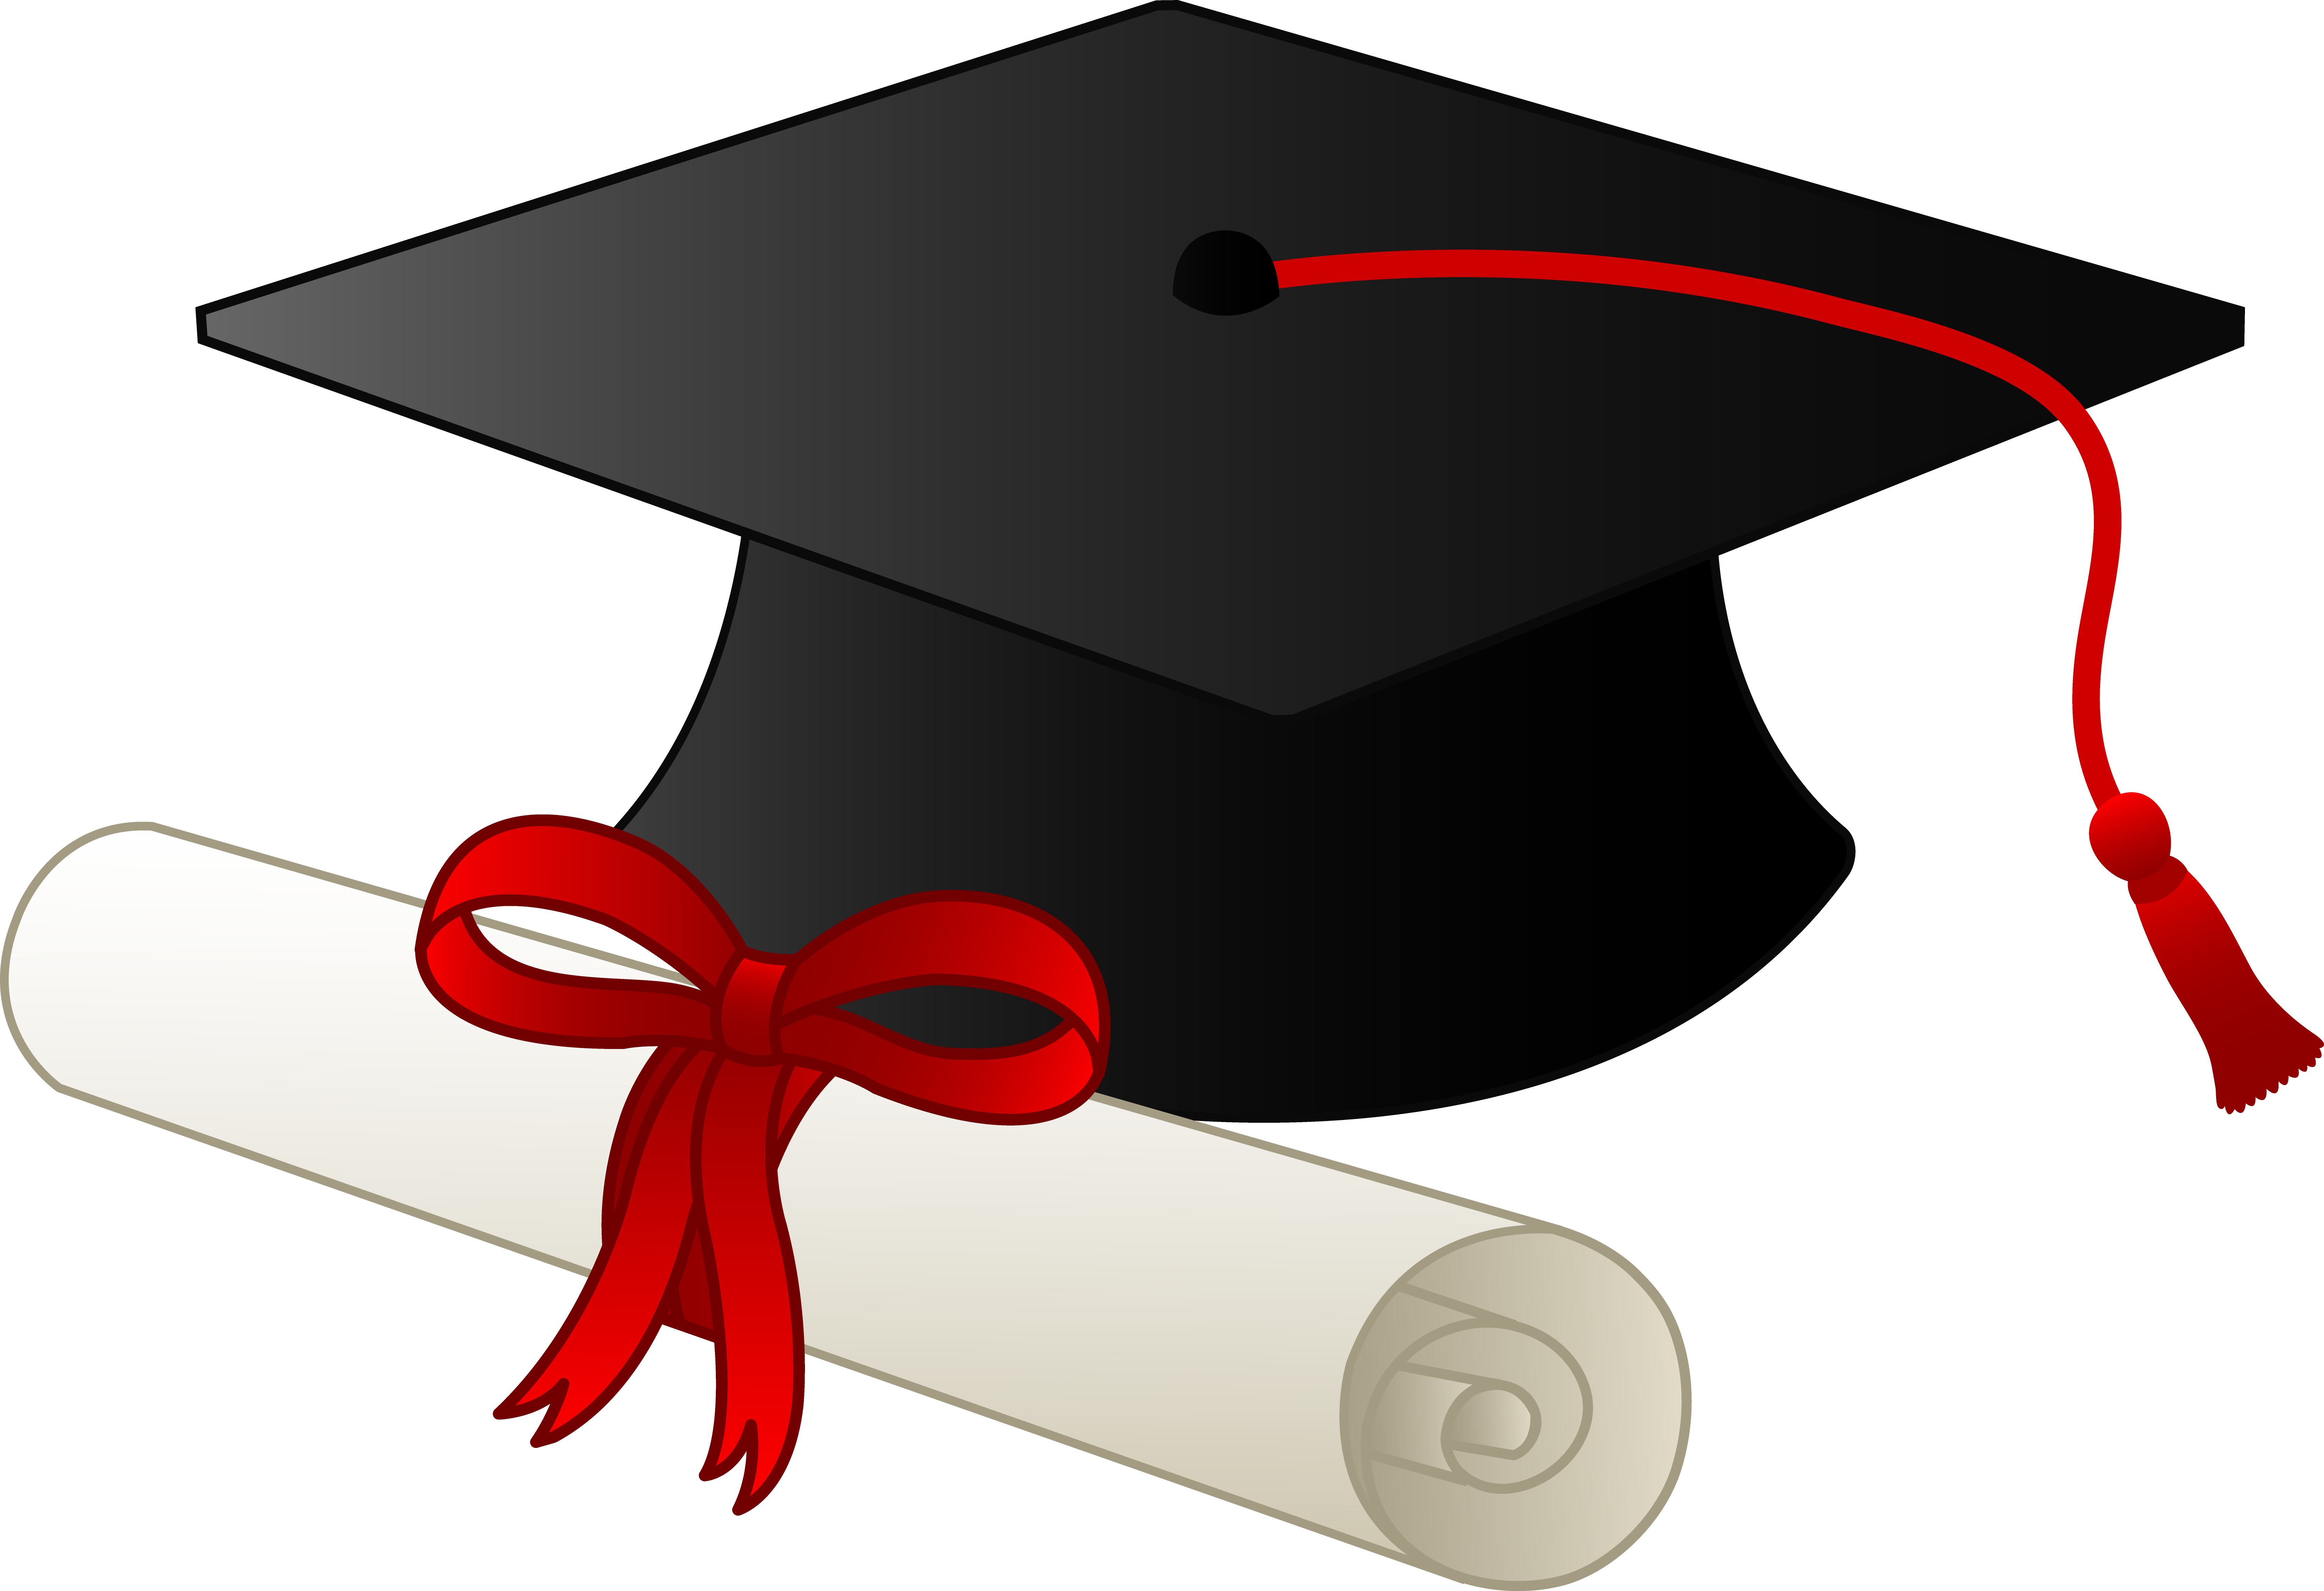 Diploma Cap.png - ClipArt Best